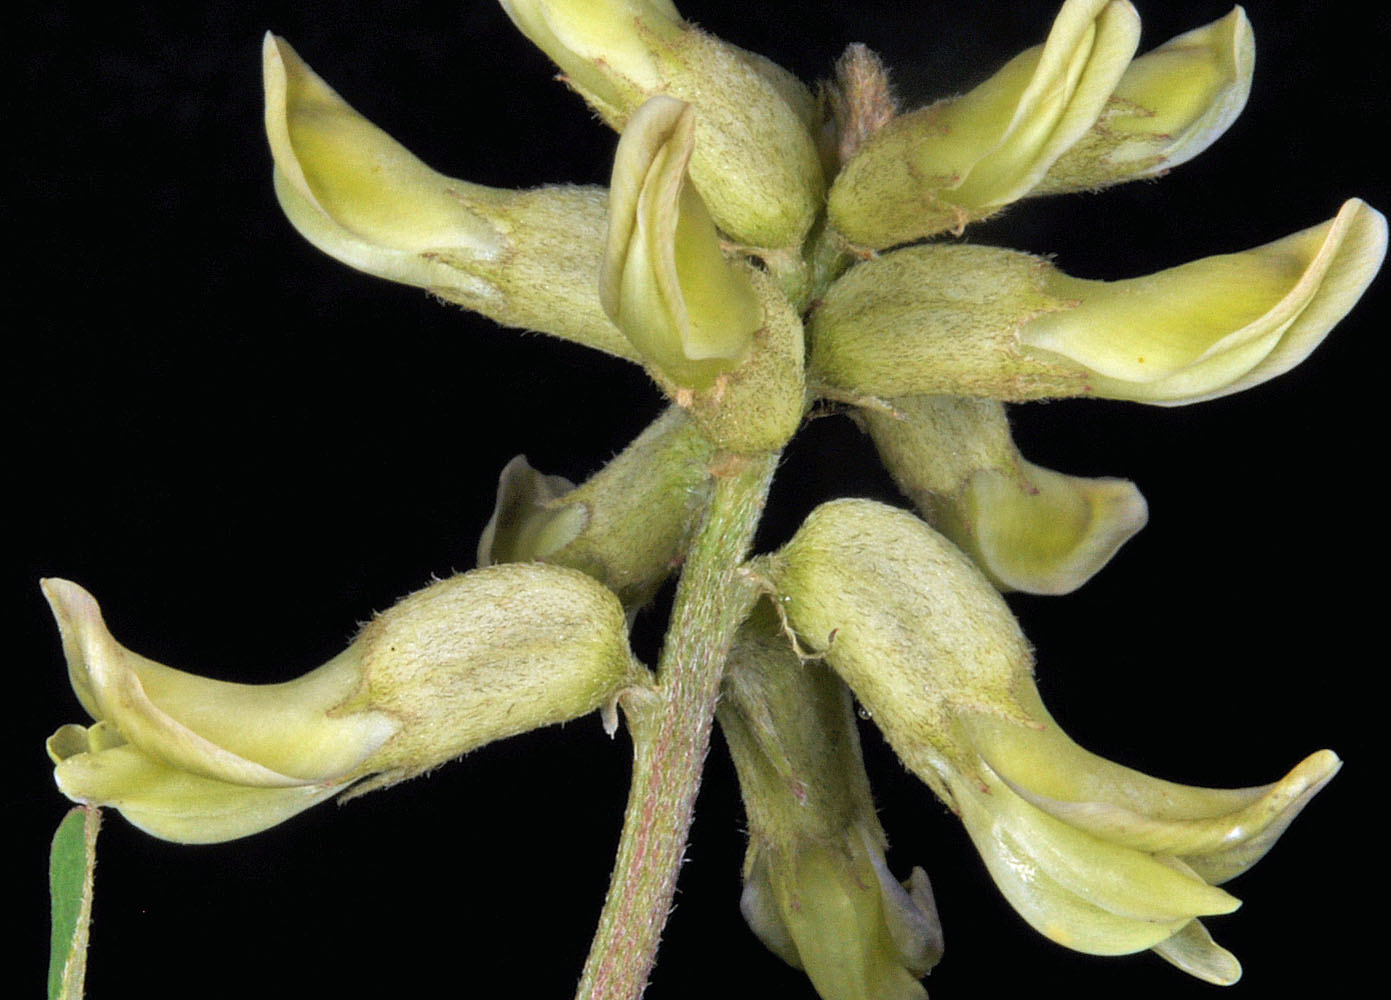 Flora of Eastern Washington Image: Astragalus canadensis